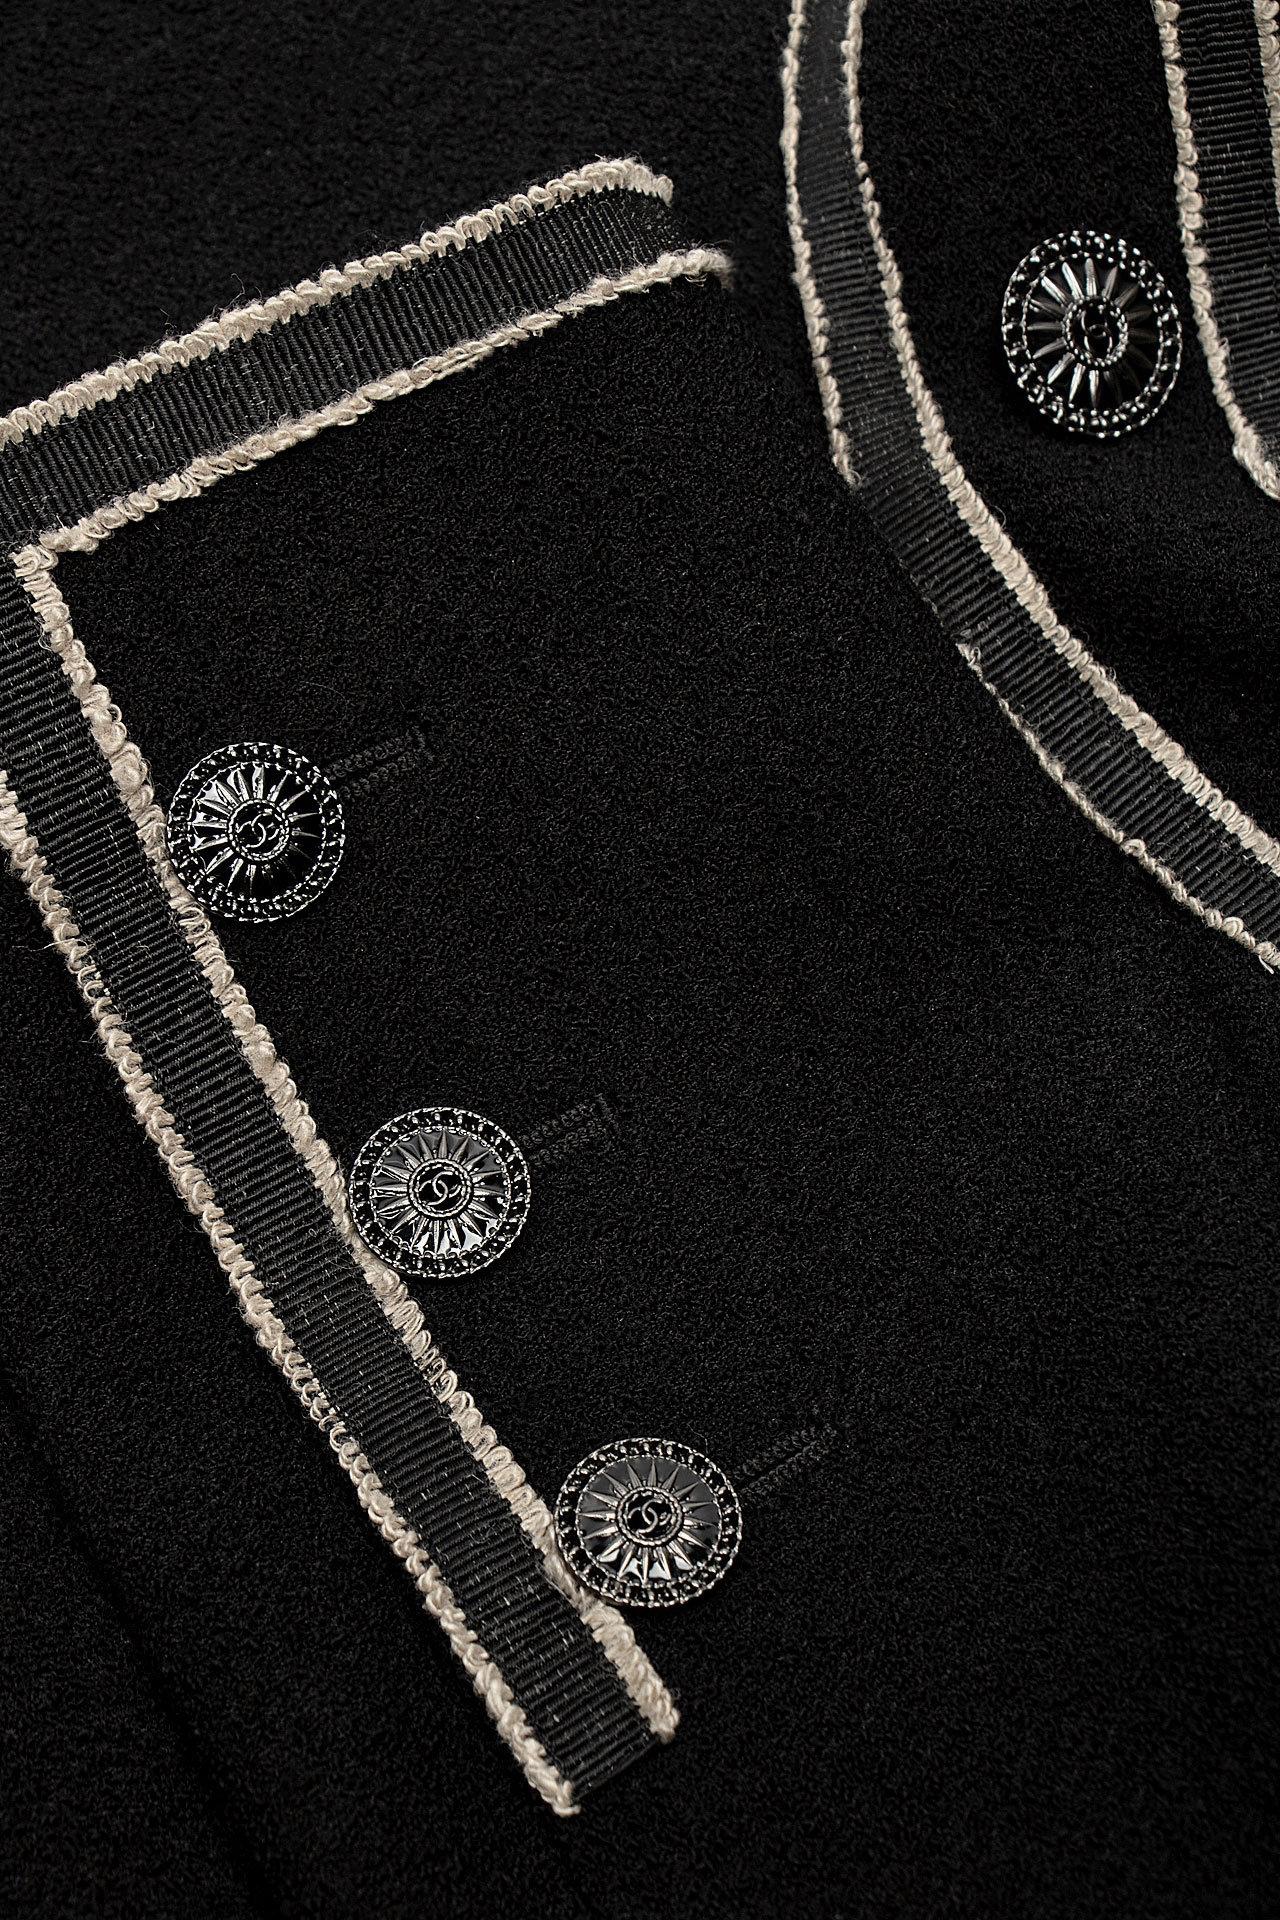 Chanel Paris / Singapore Runway Black Tweed Coat 9